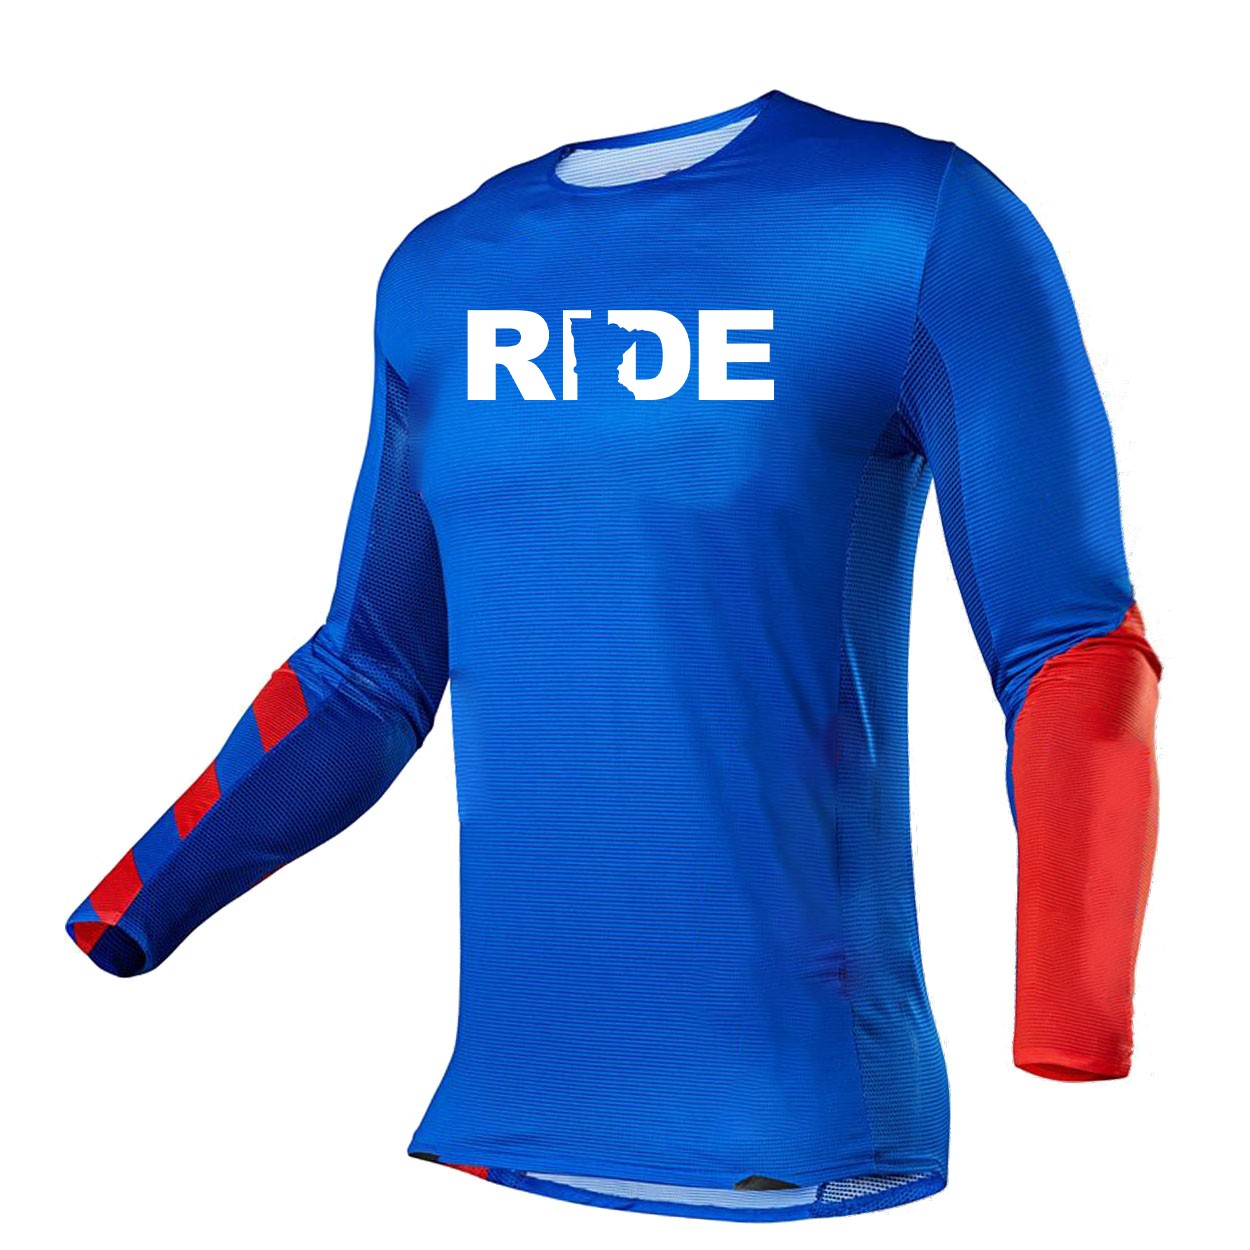 Ride Minnesota Classic Performance Jersey Long Sleeve Shirt Blue/Red